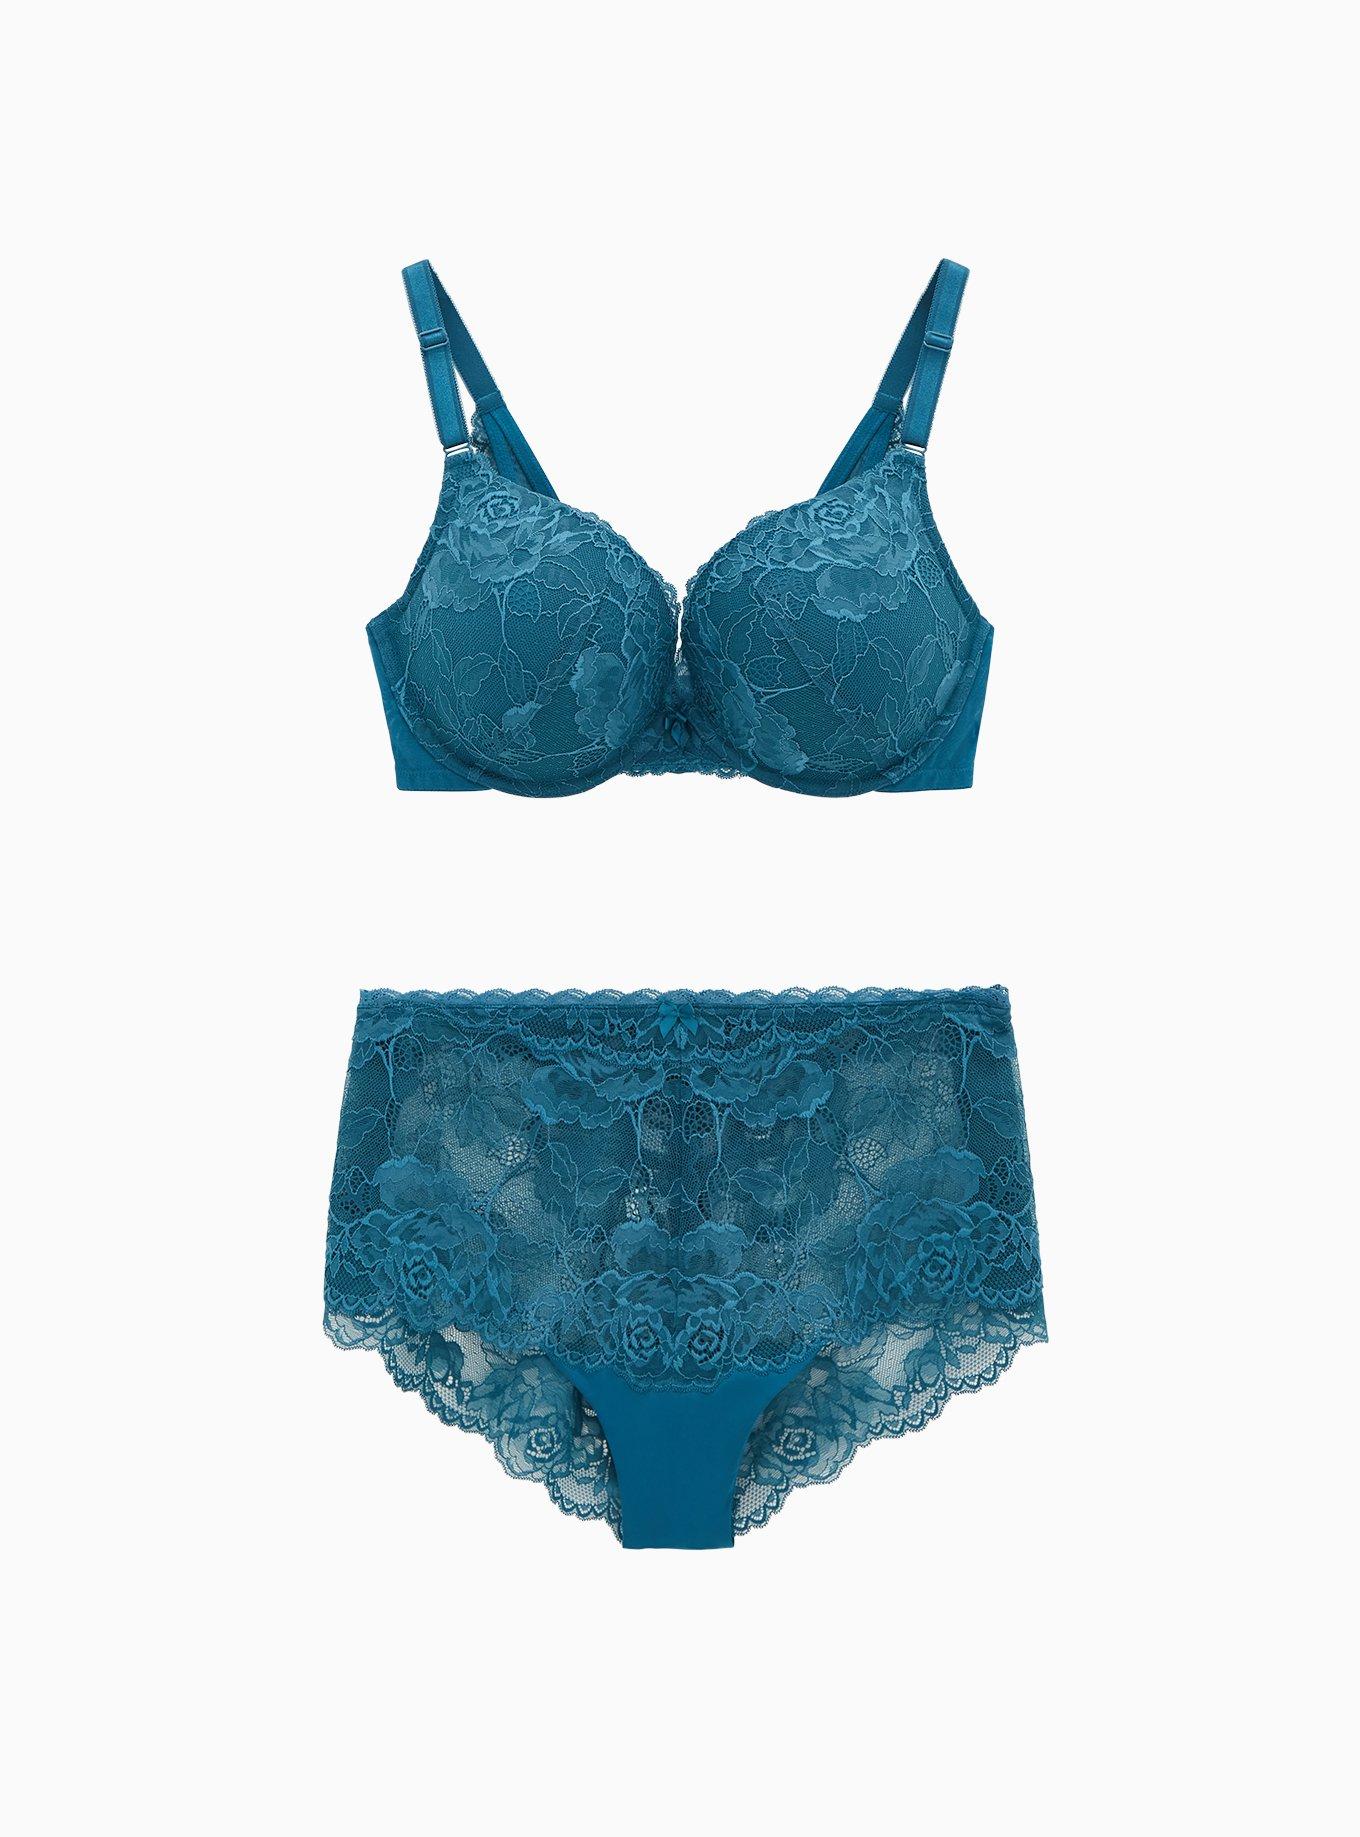 Set 34C / UK12] Hattie elongated floral lace balconette bra & thong/panty -  Deep Blue, Women's Fashion, New Undergarments & Loungewear on Carousell